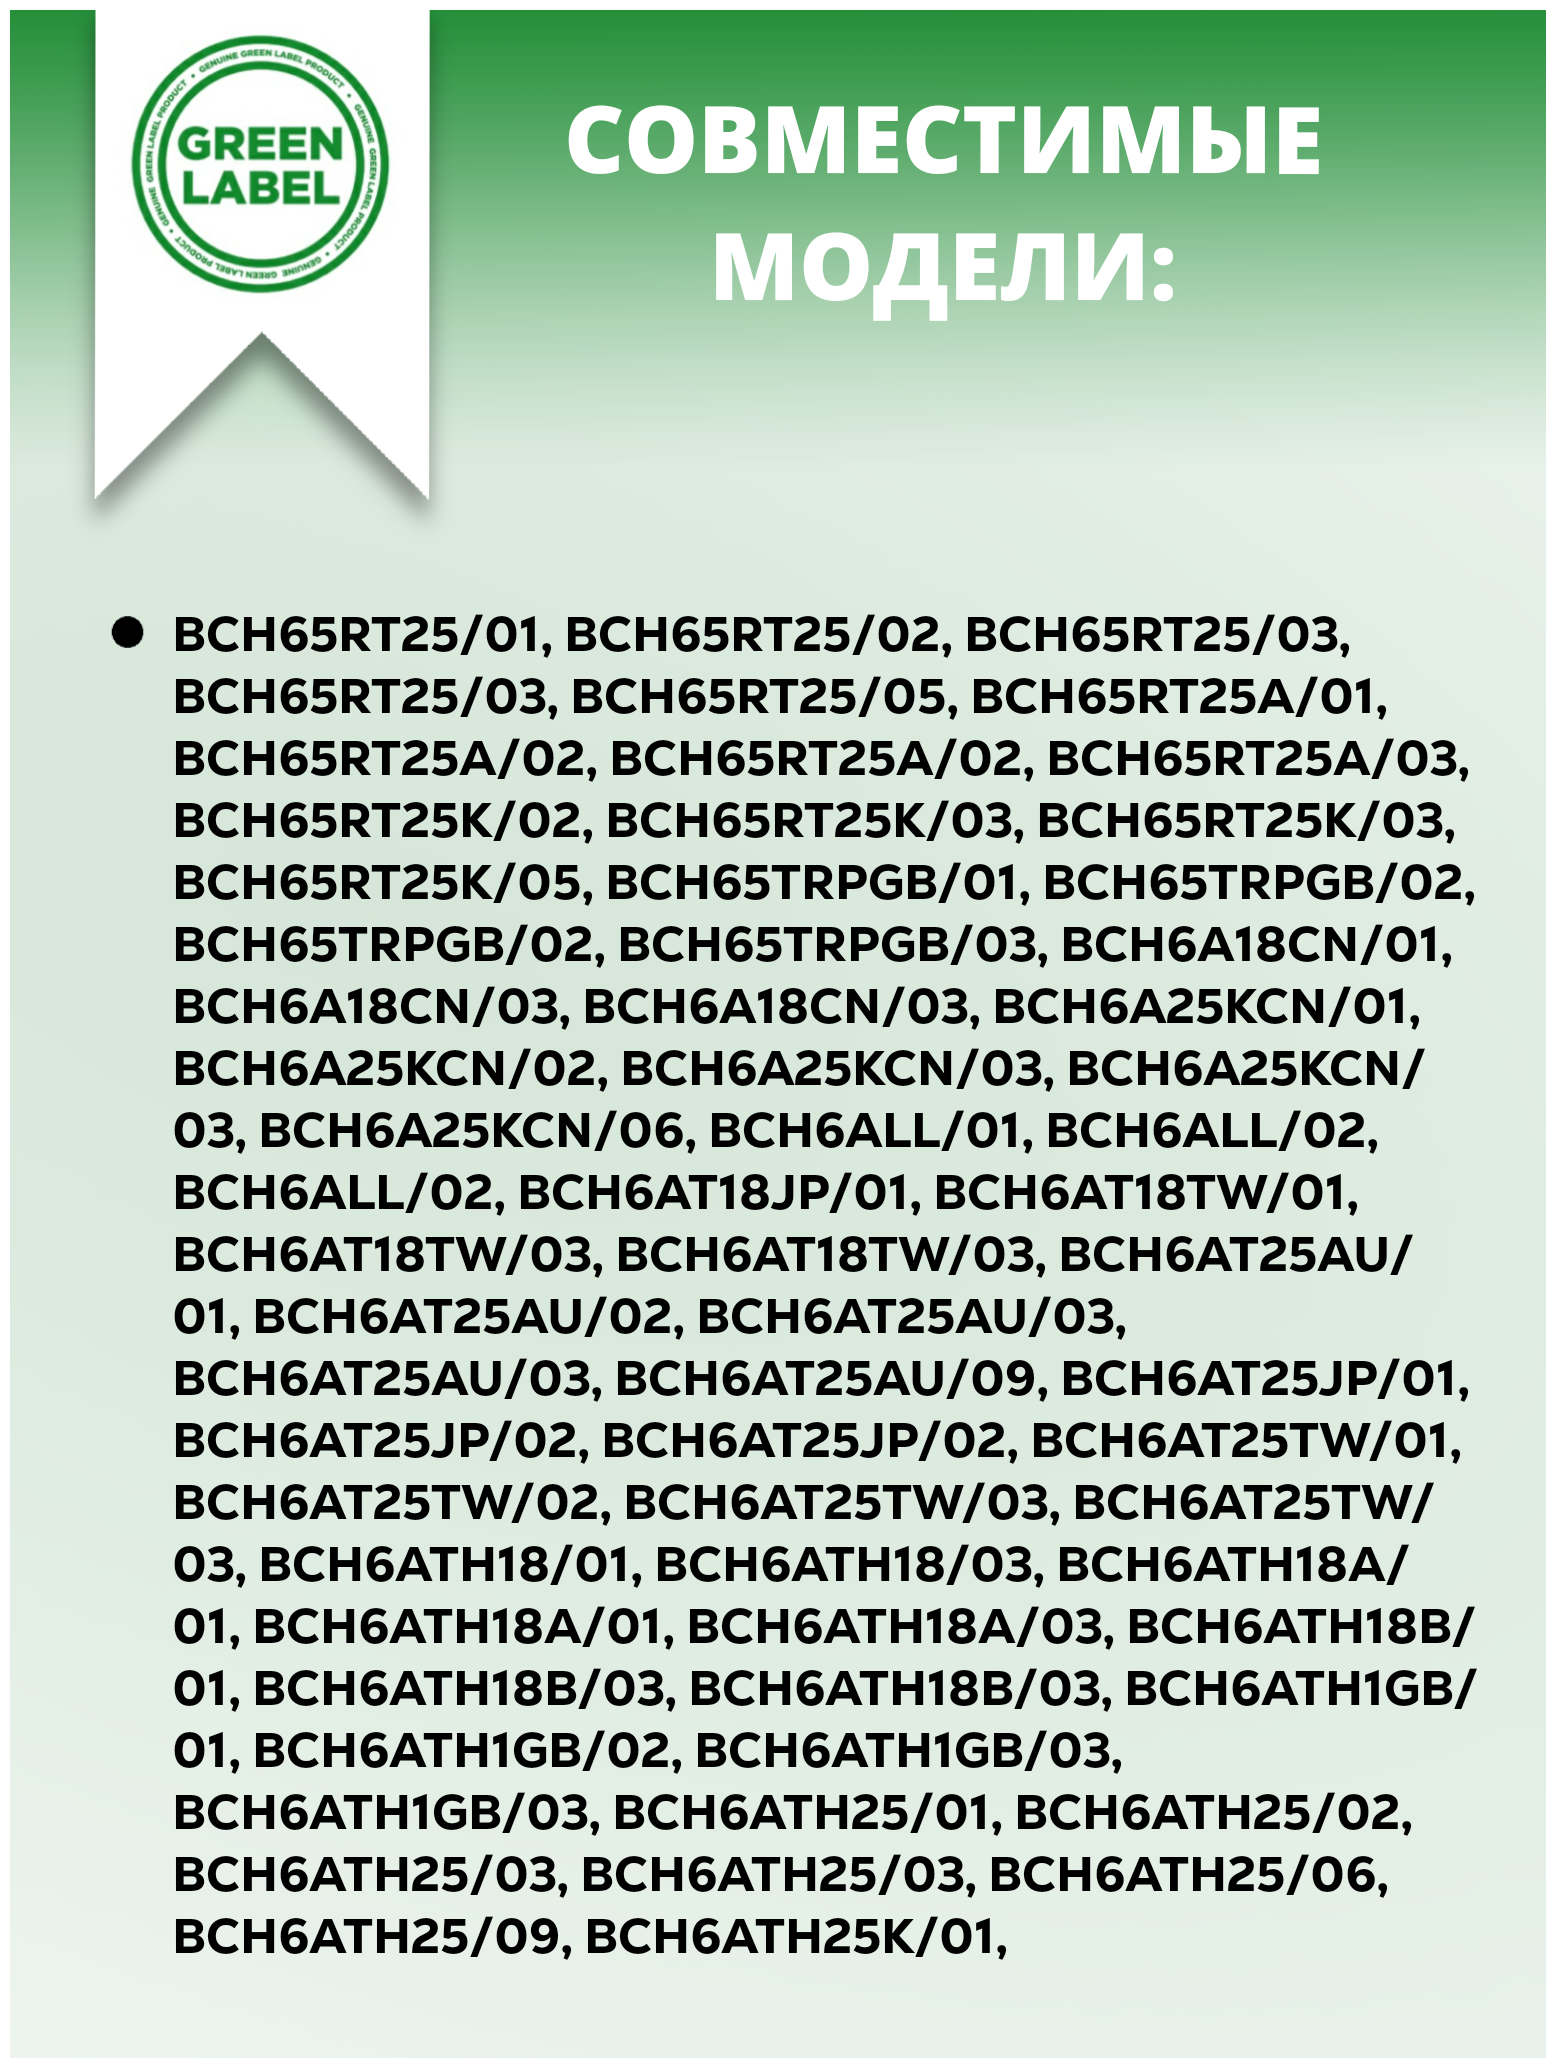 Green Label, Набор губчатых фильтров для пылесосов Bosch Athlet (BCH6ATH25, BCH6ATH18, BCH6ZOOO) - фотография № 7